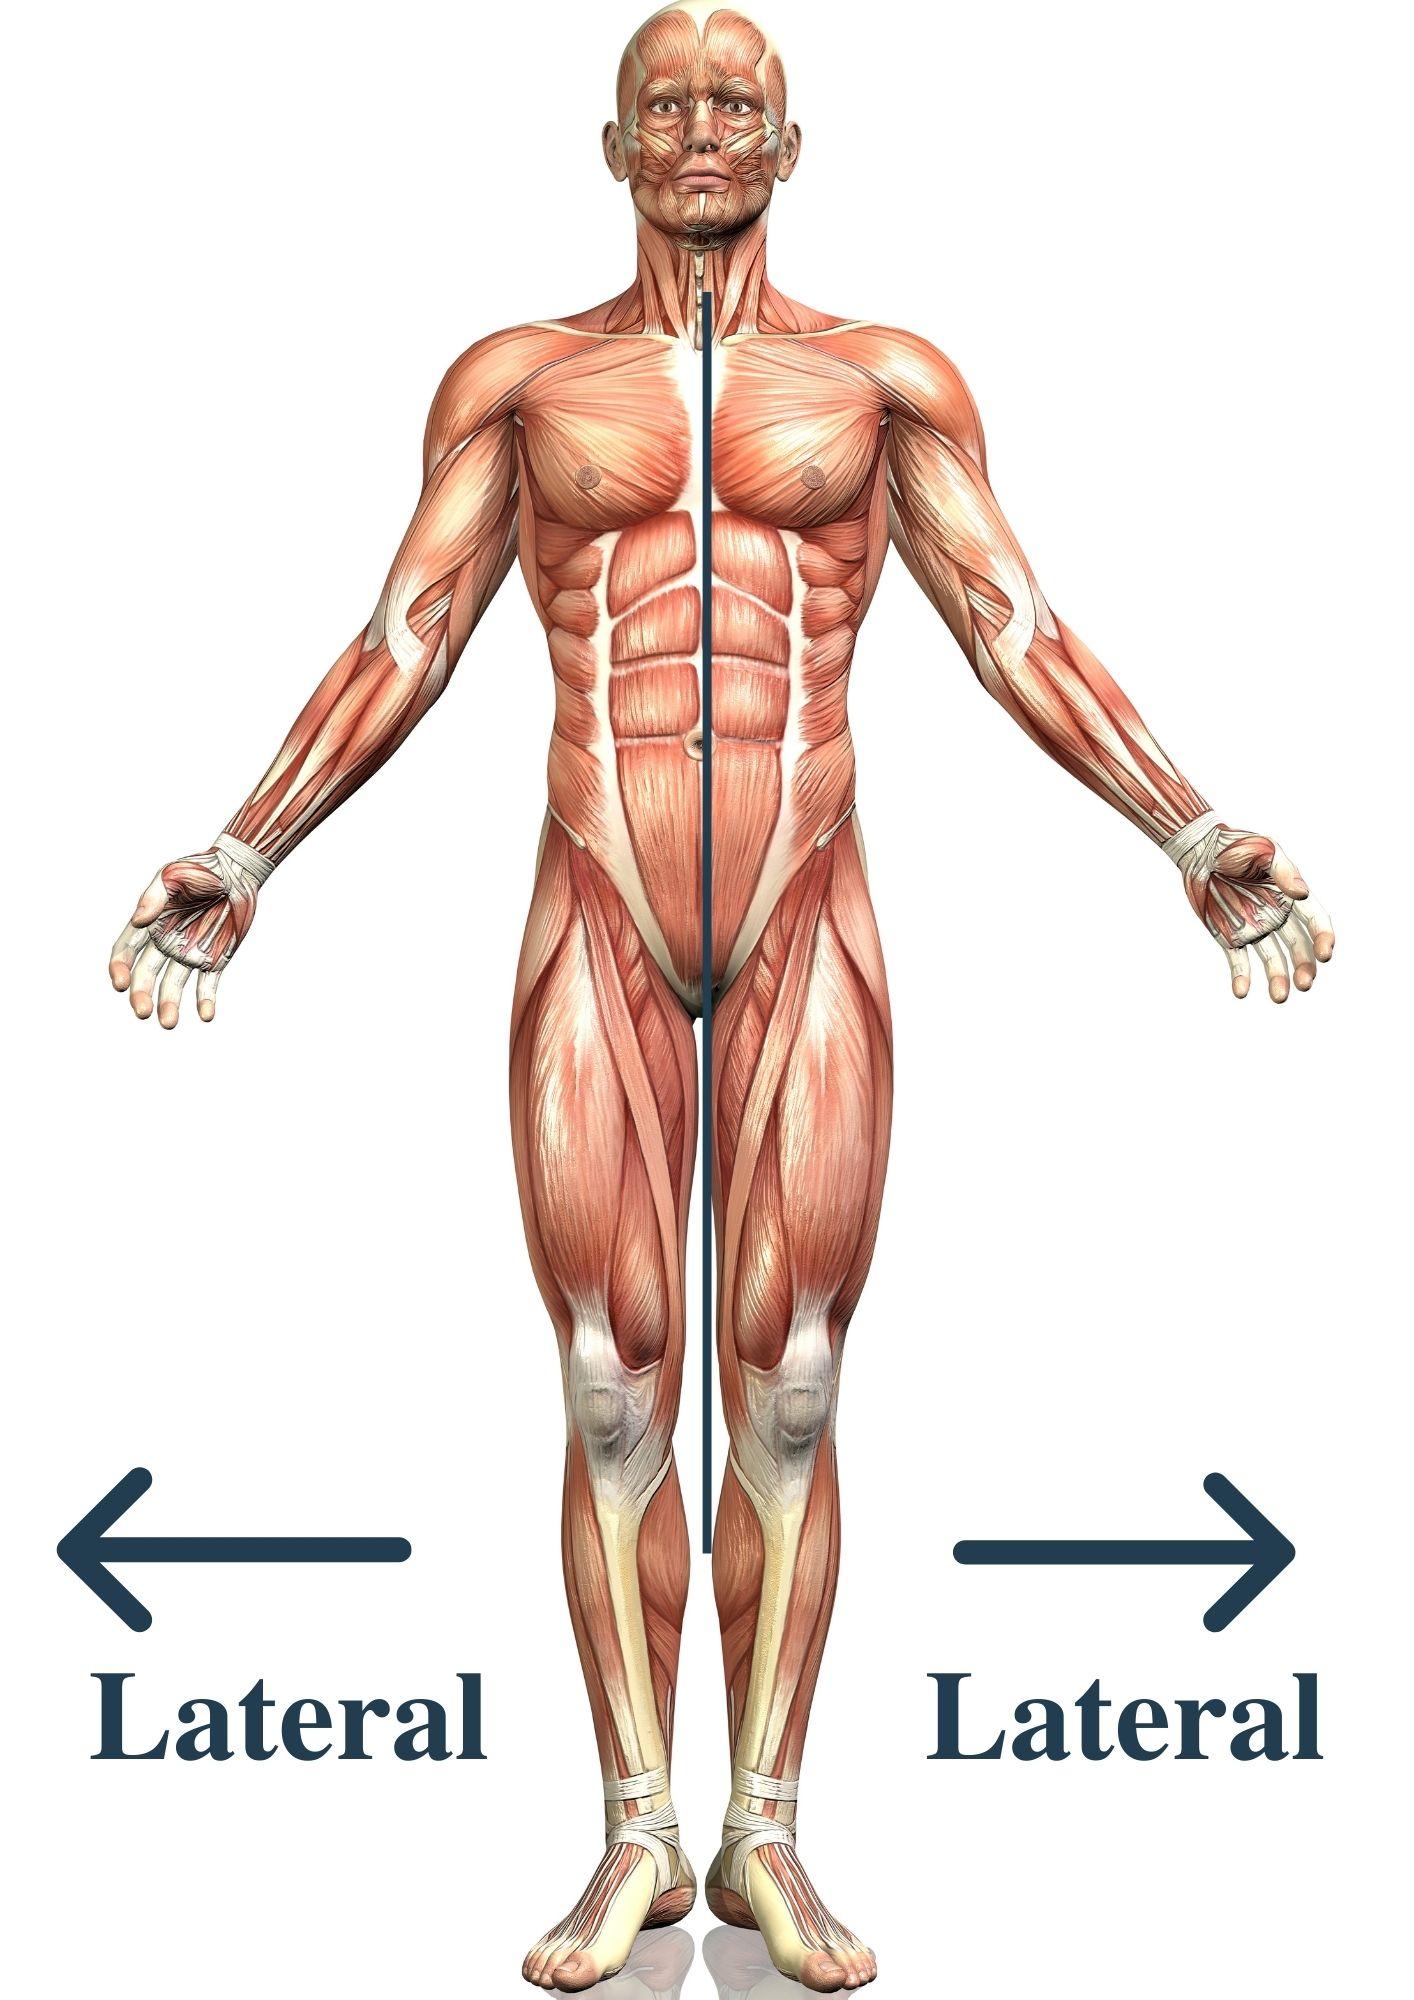 define lateral excursion anatomy